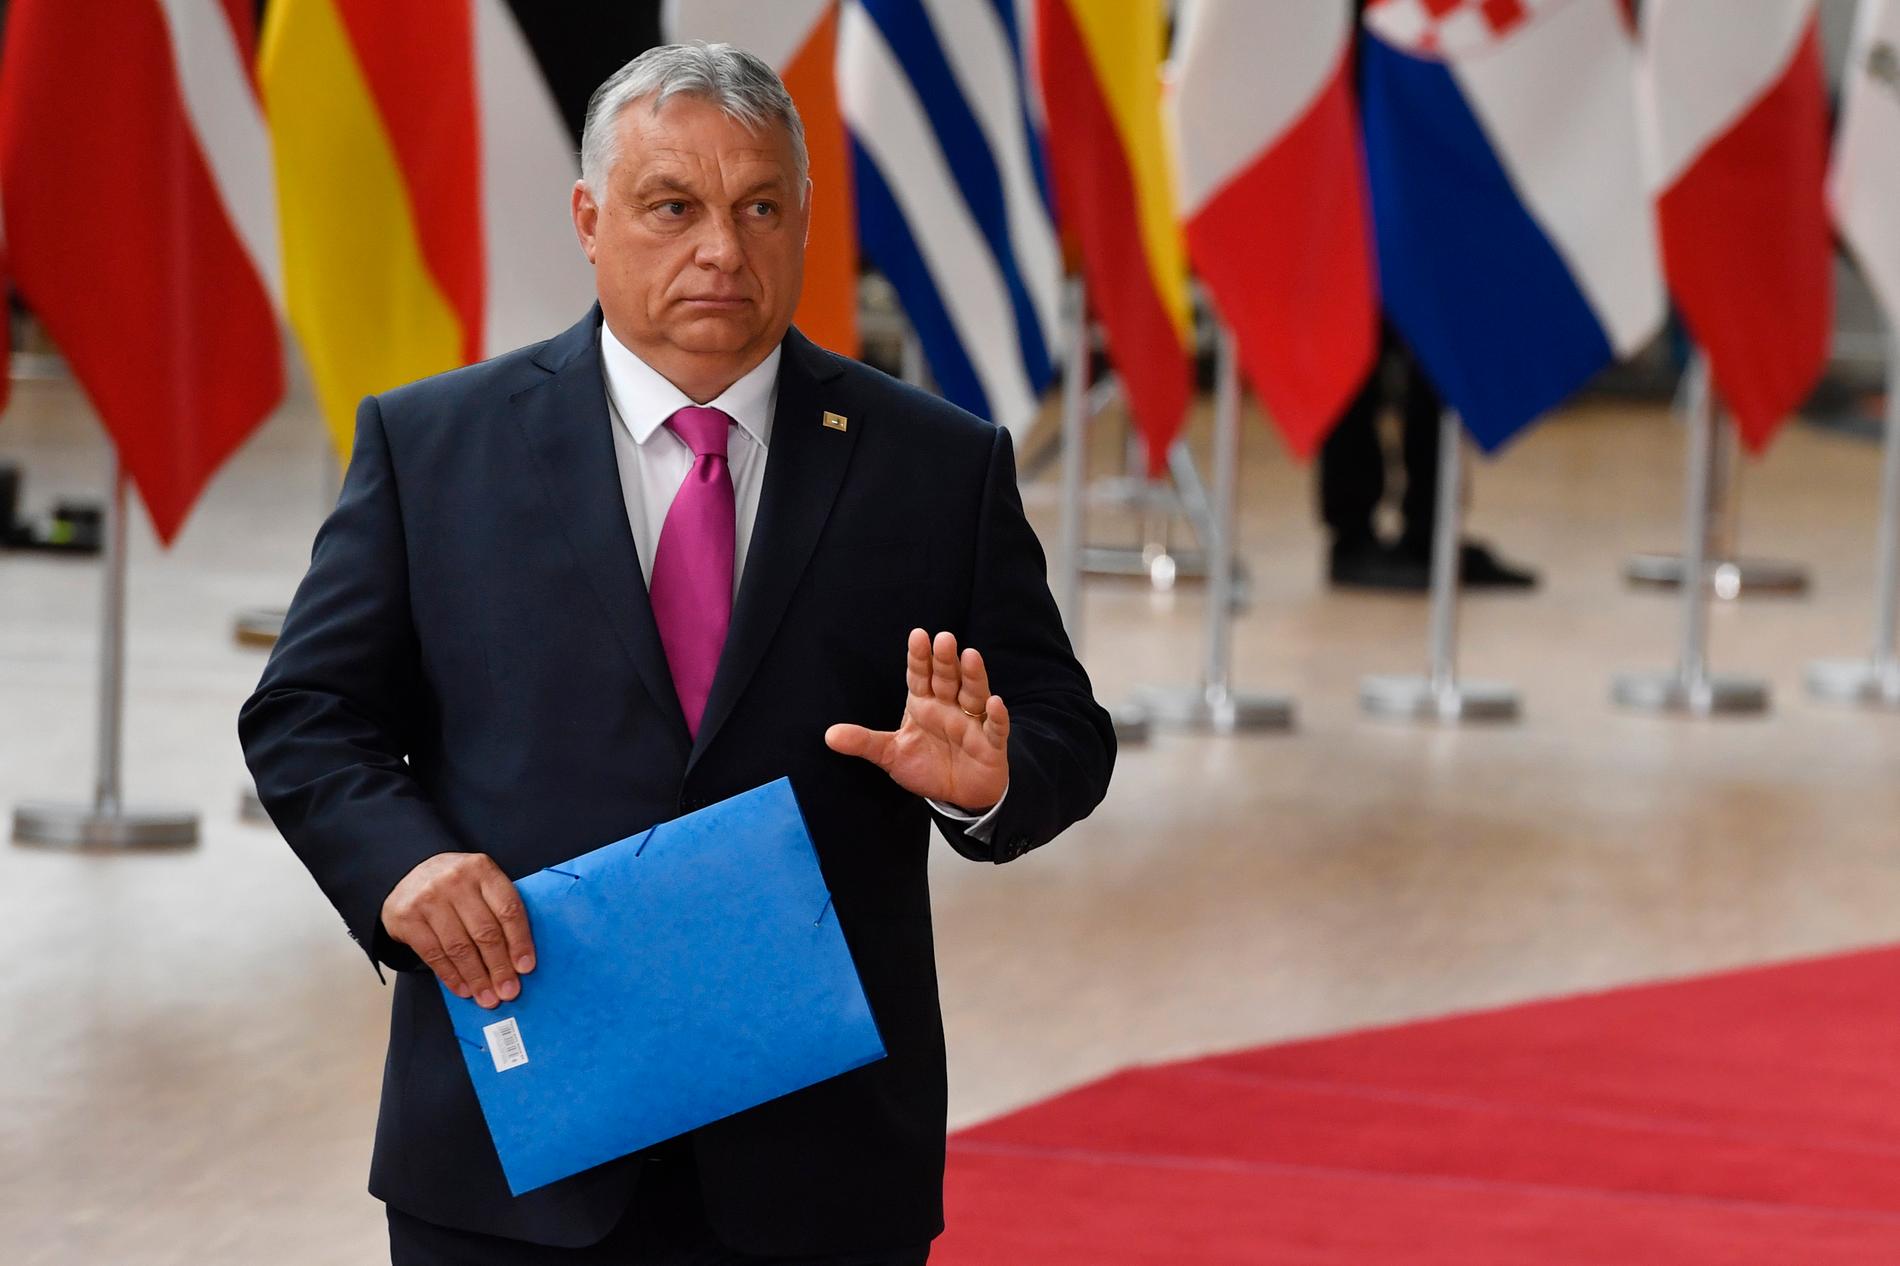 På punkt efter punkt har Ungern brutit mot de grundläggande principer varpå EU vilar. 